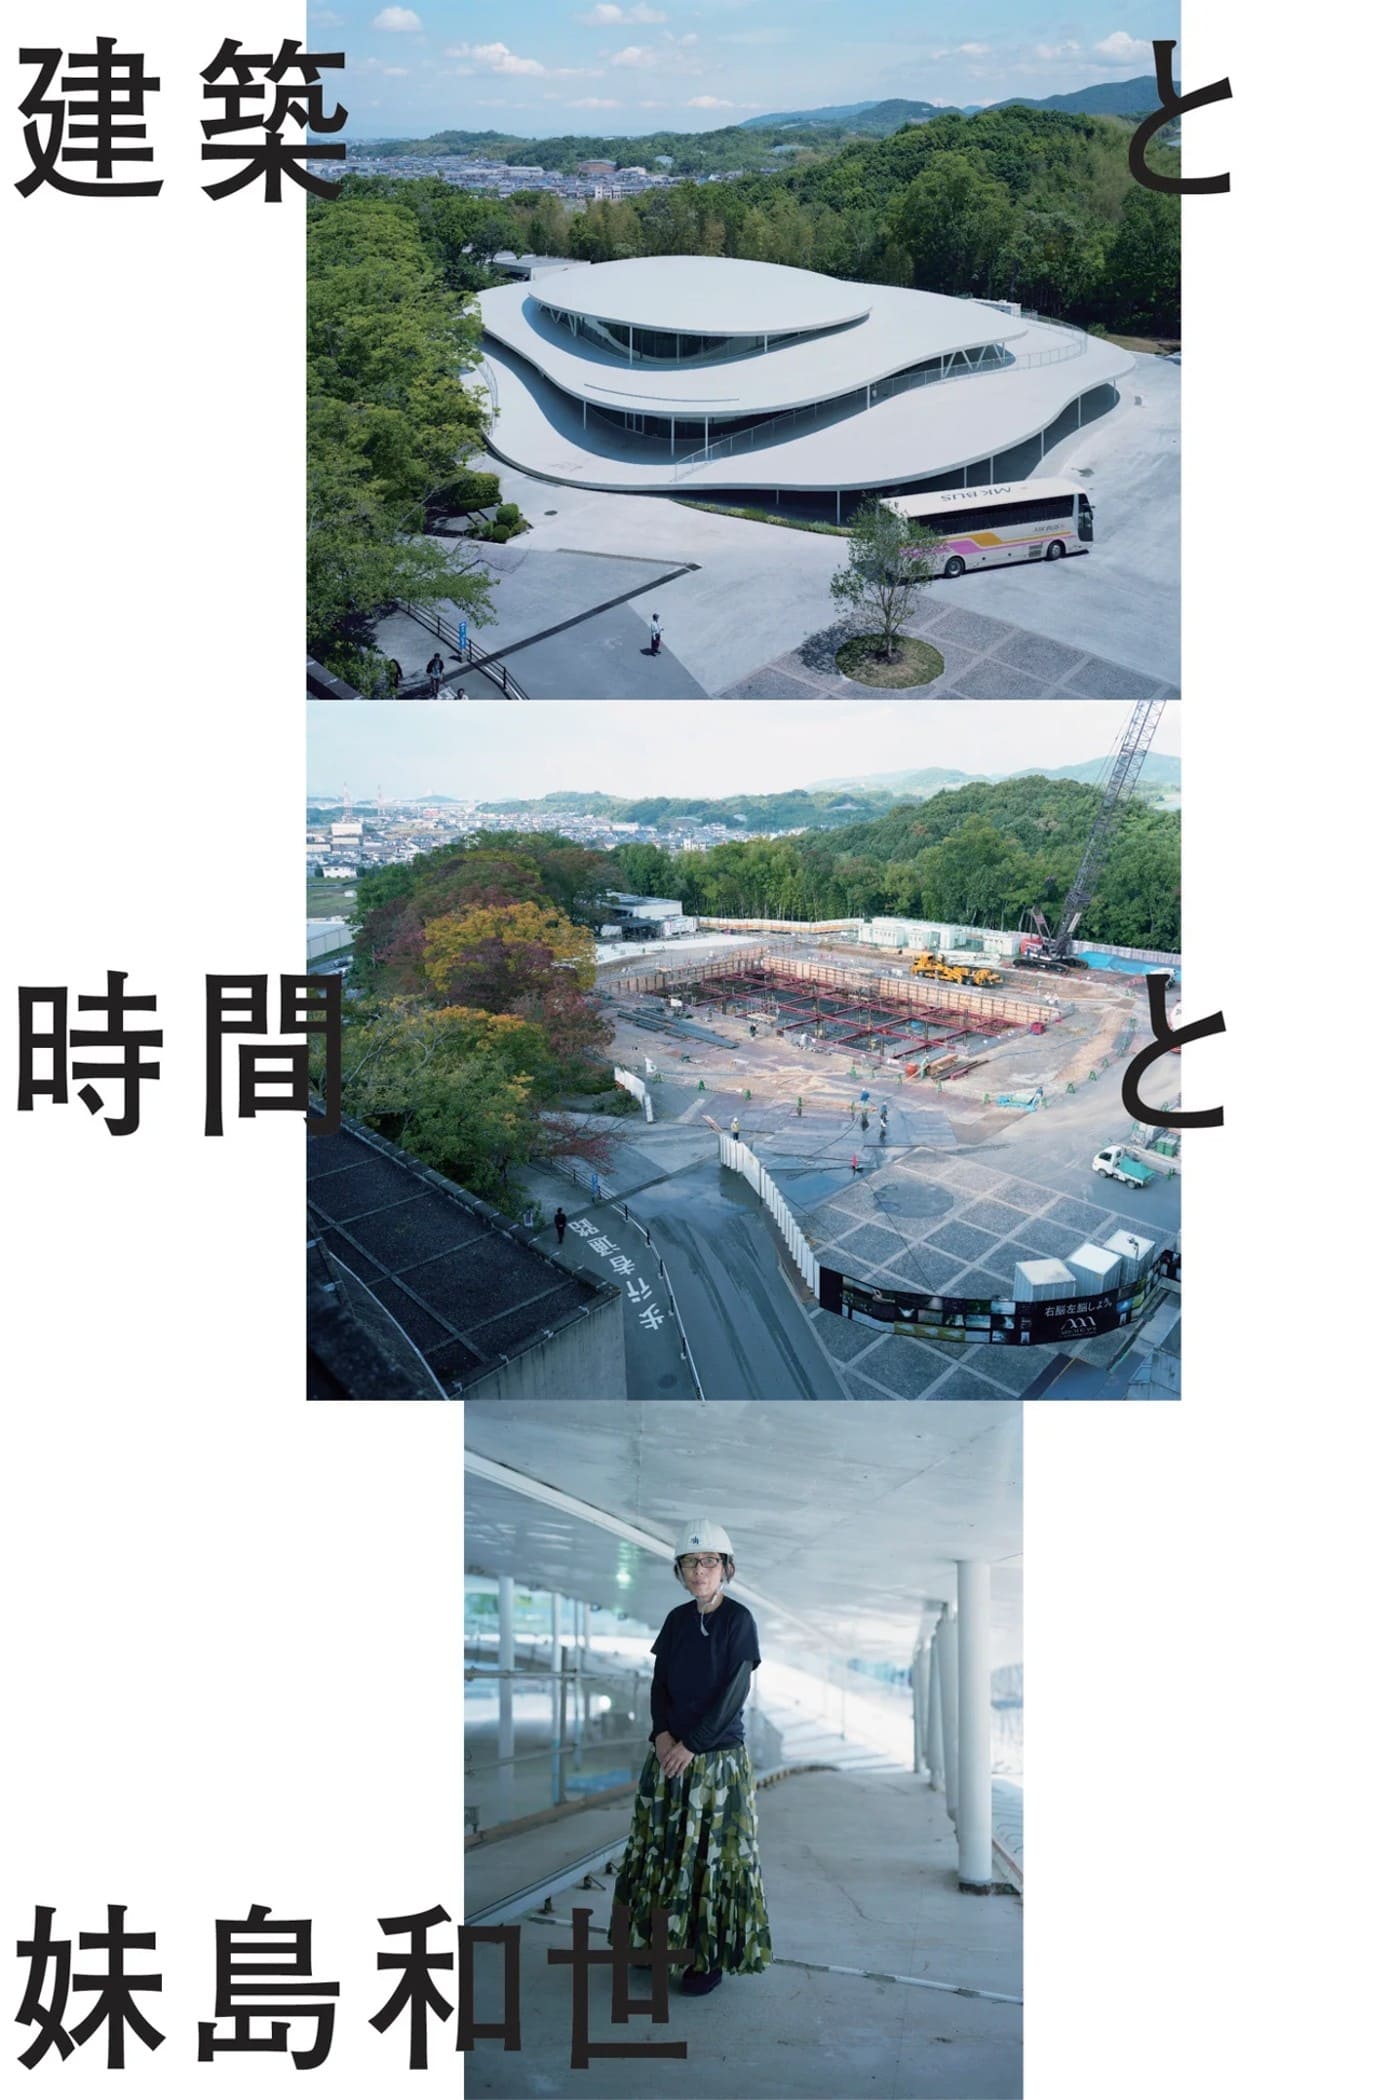 Architecture, Time and Kazuyo Sejima